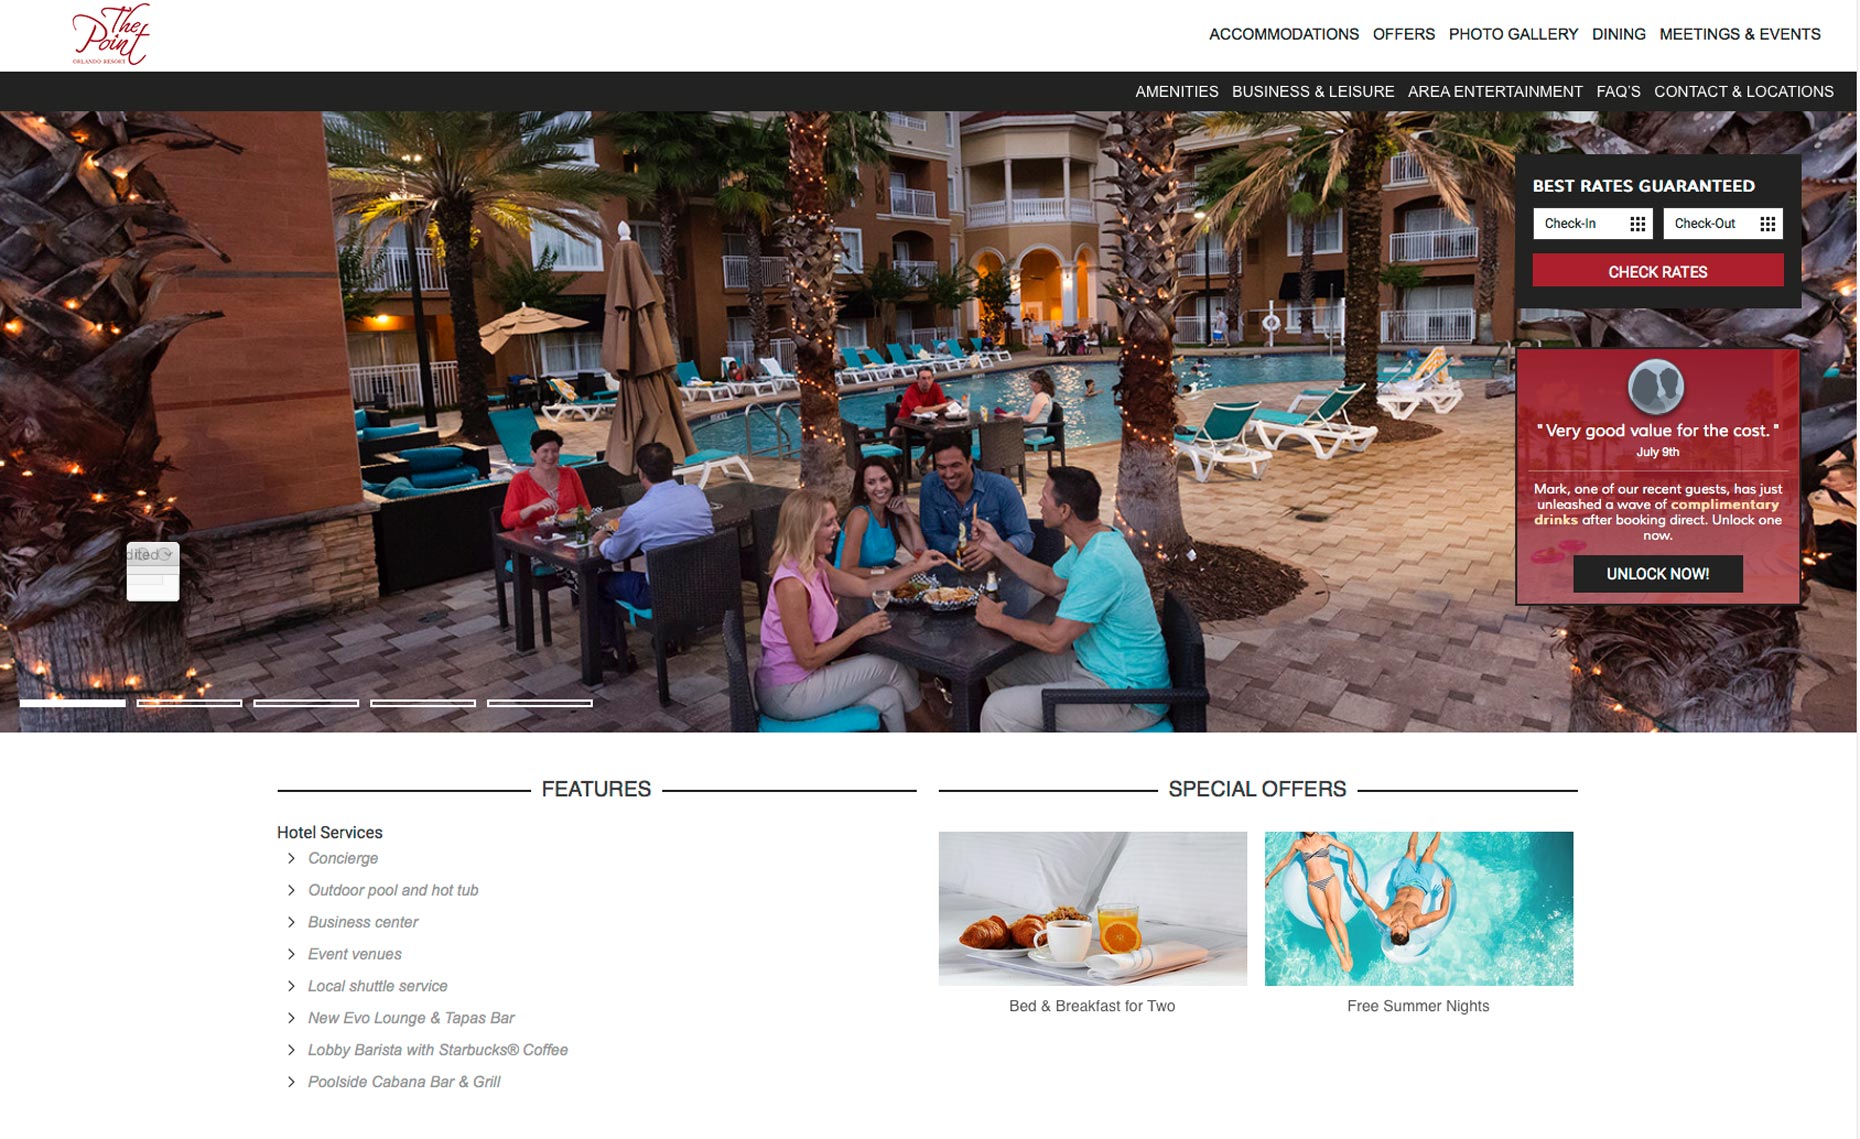 Hotel Photography | Point Orlando Hotel